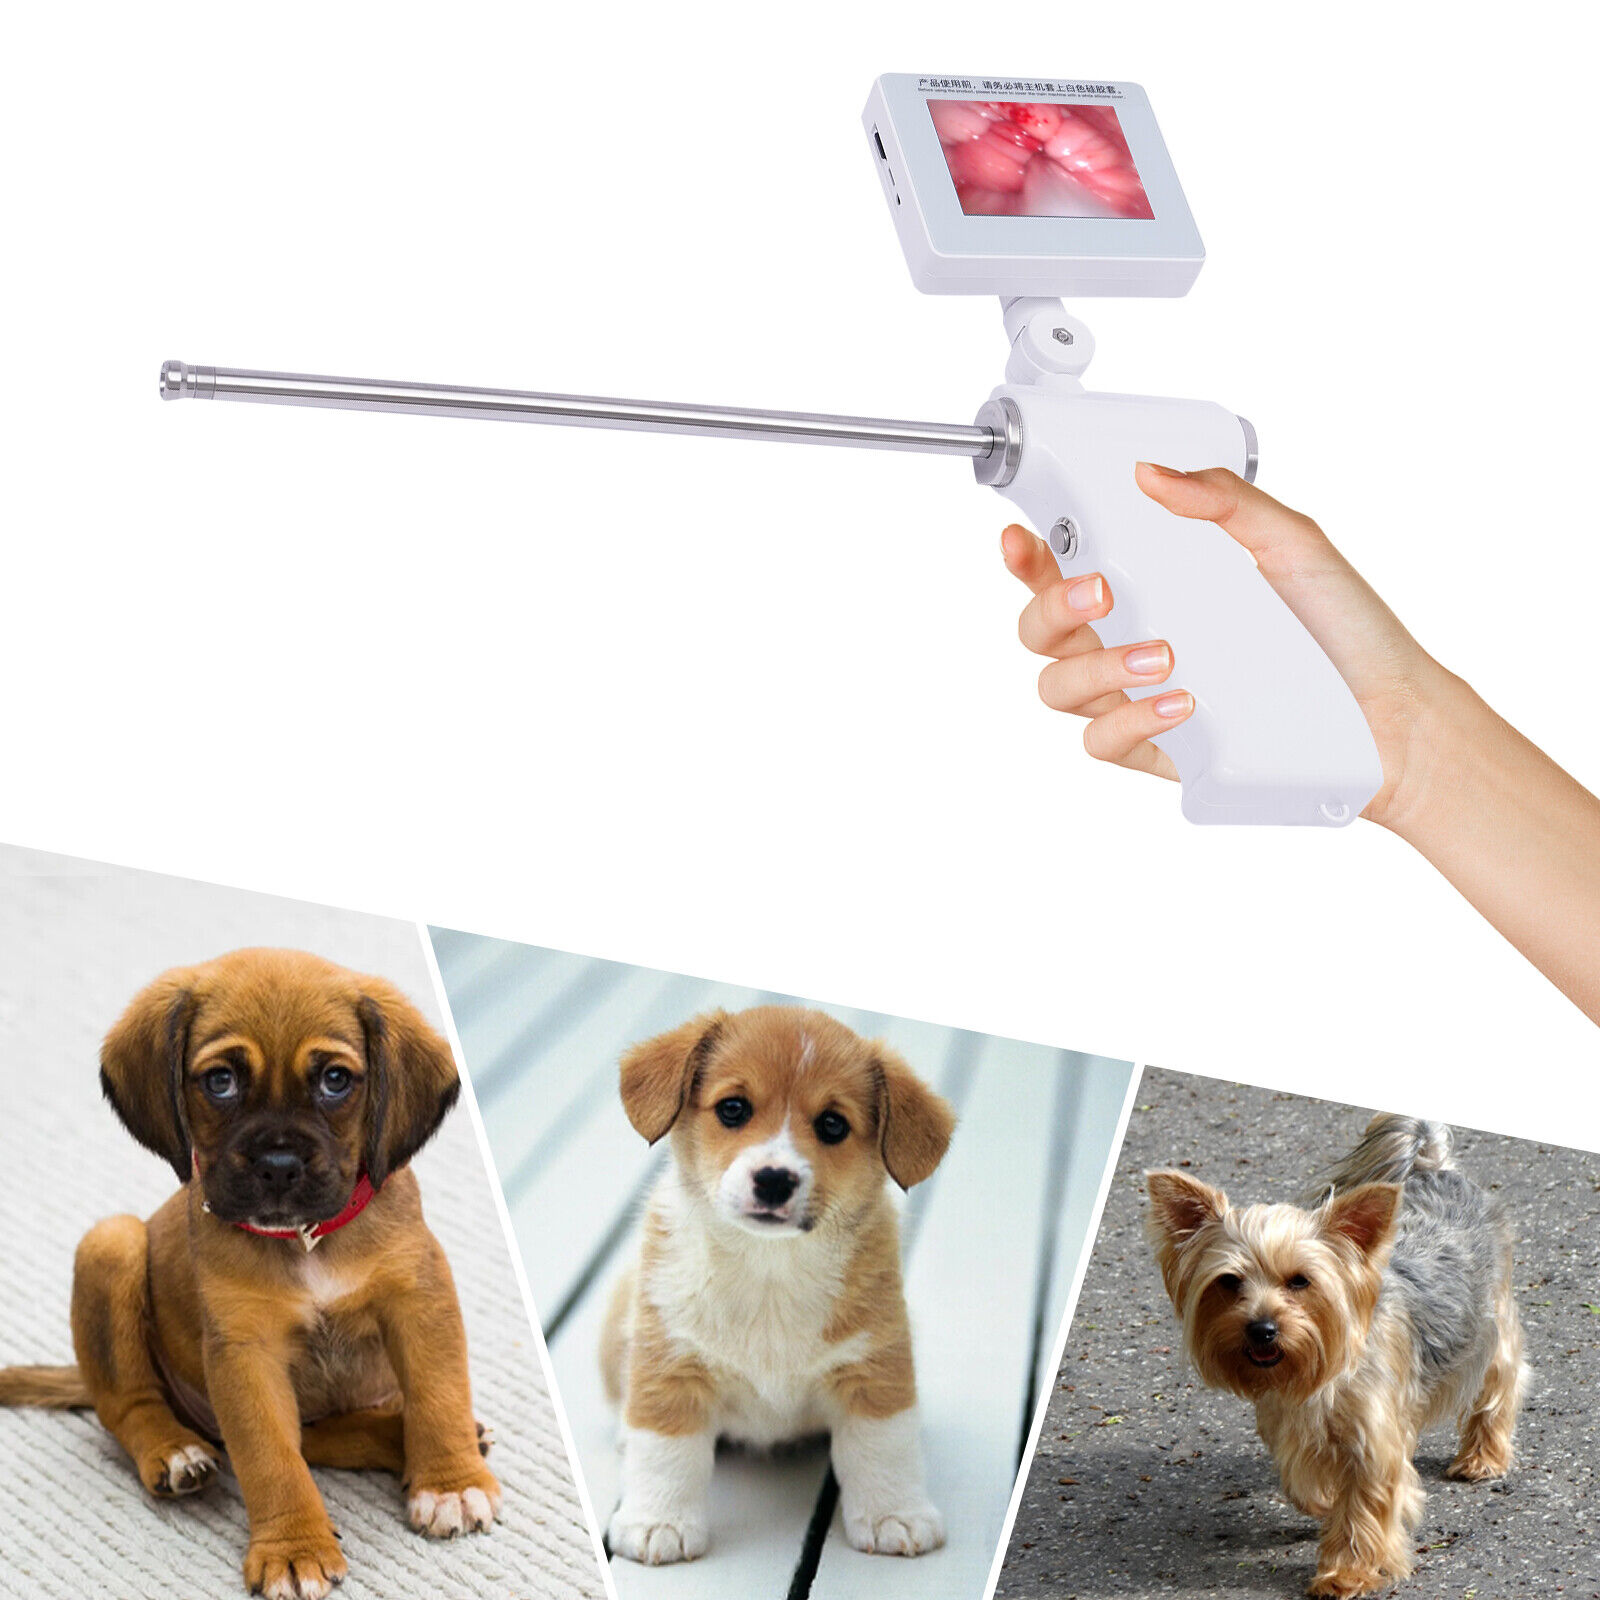 Visual Artificial Dog Insemination Gun Kit 5MP Camera + 20x Insemination Tubes Unbranded Does Not Apply - фотография #23